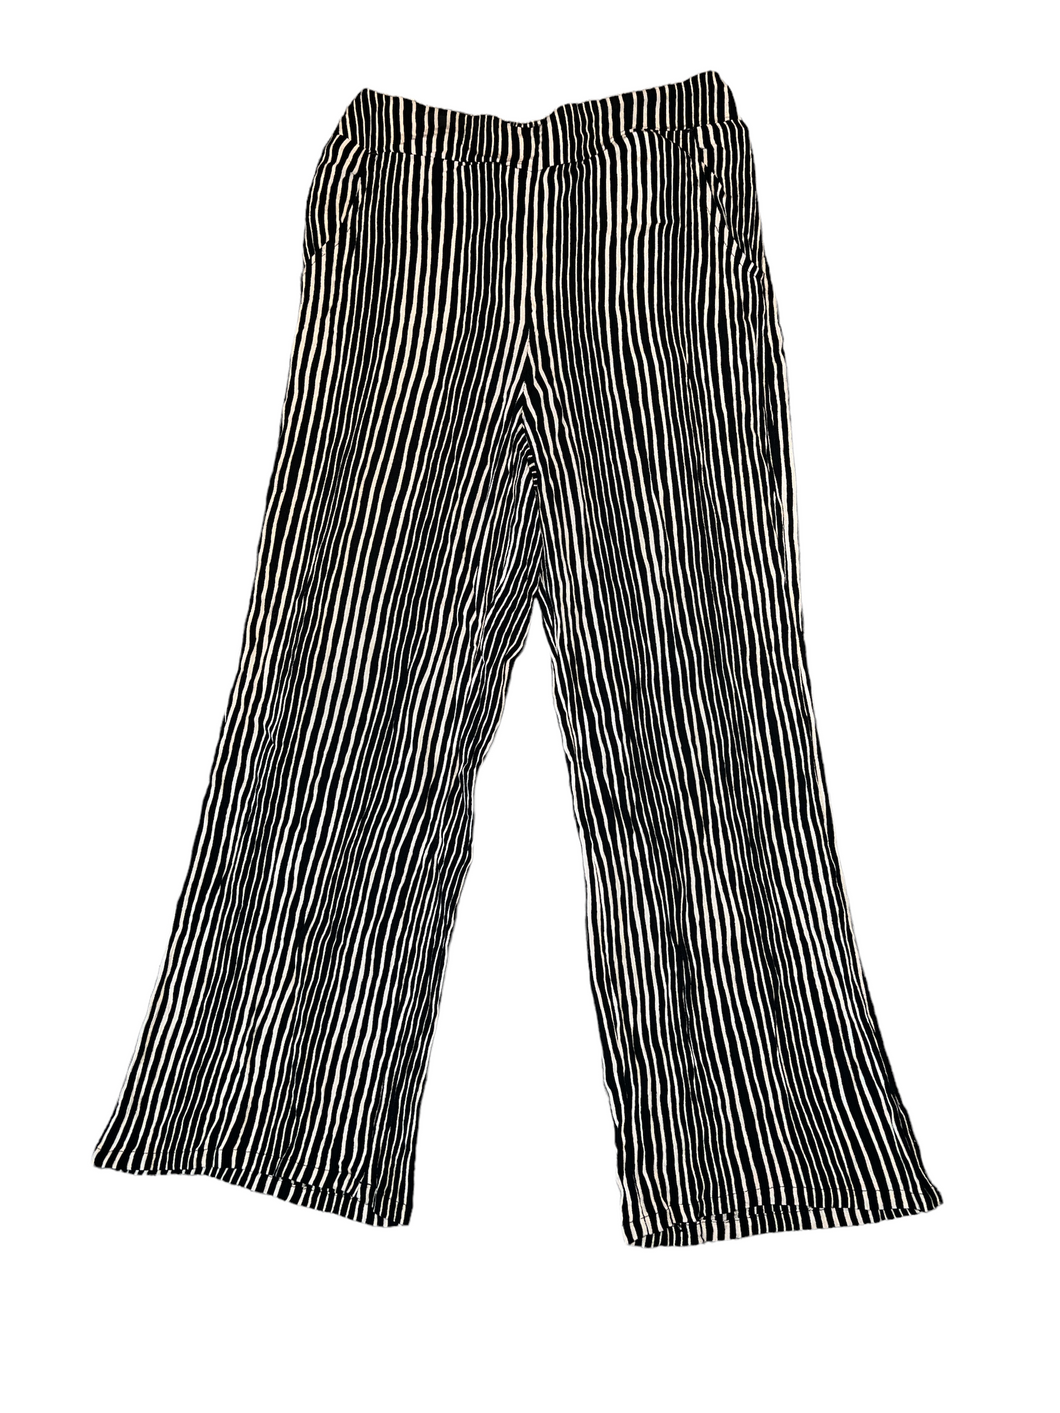 Billabong women’s striped pocket pants S